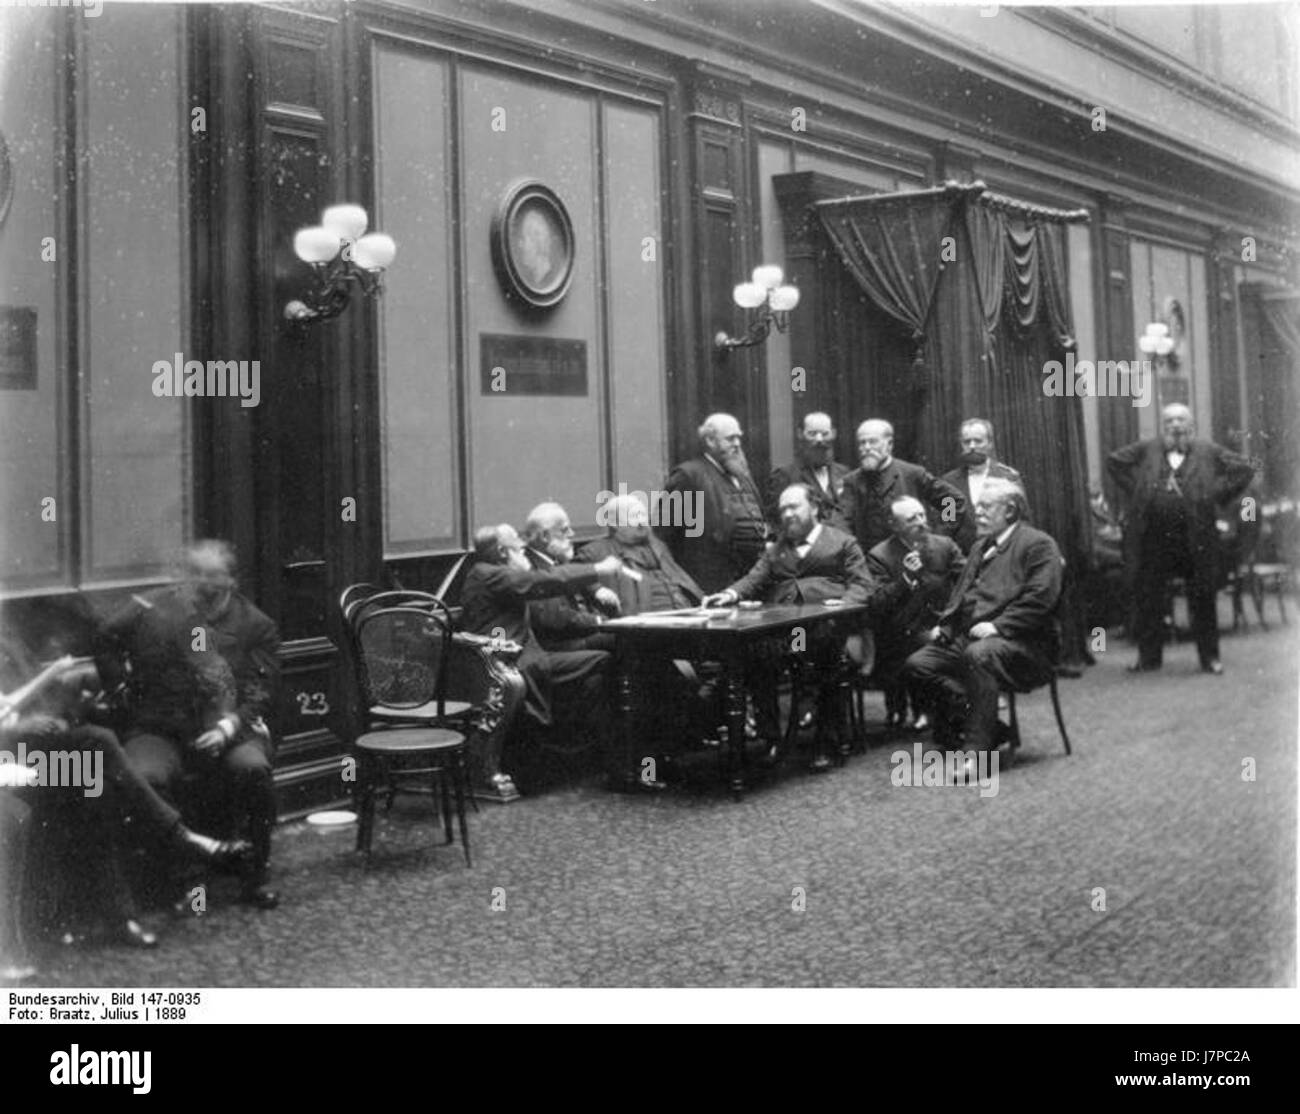 Bundesarchiv bild Black and White Stock Photos & Images - Alamy